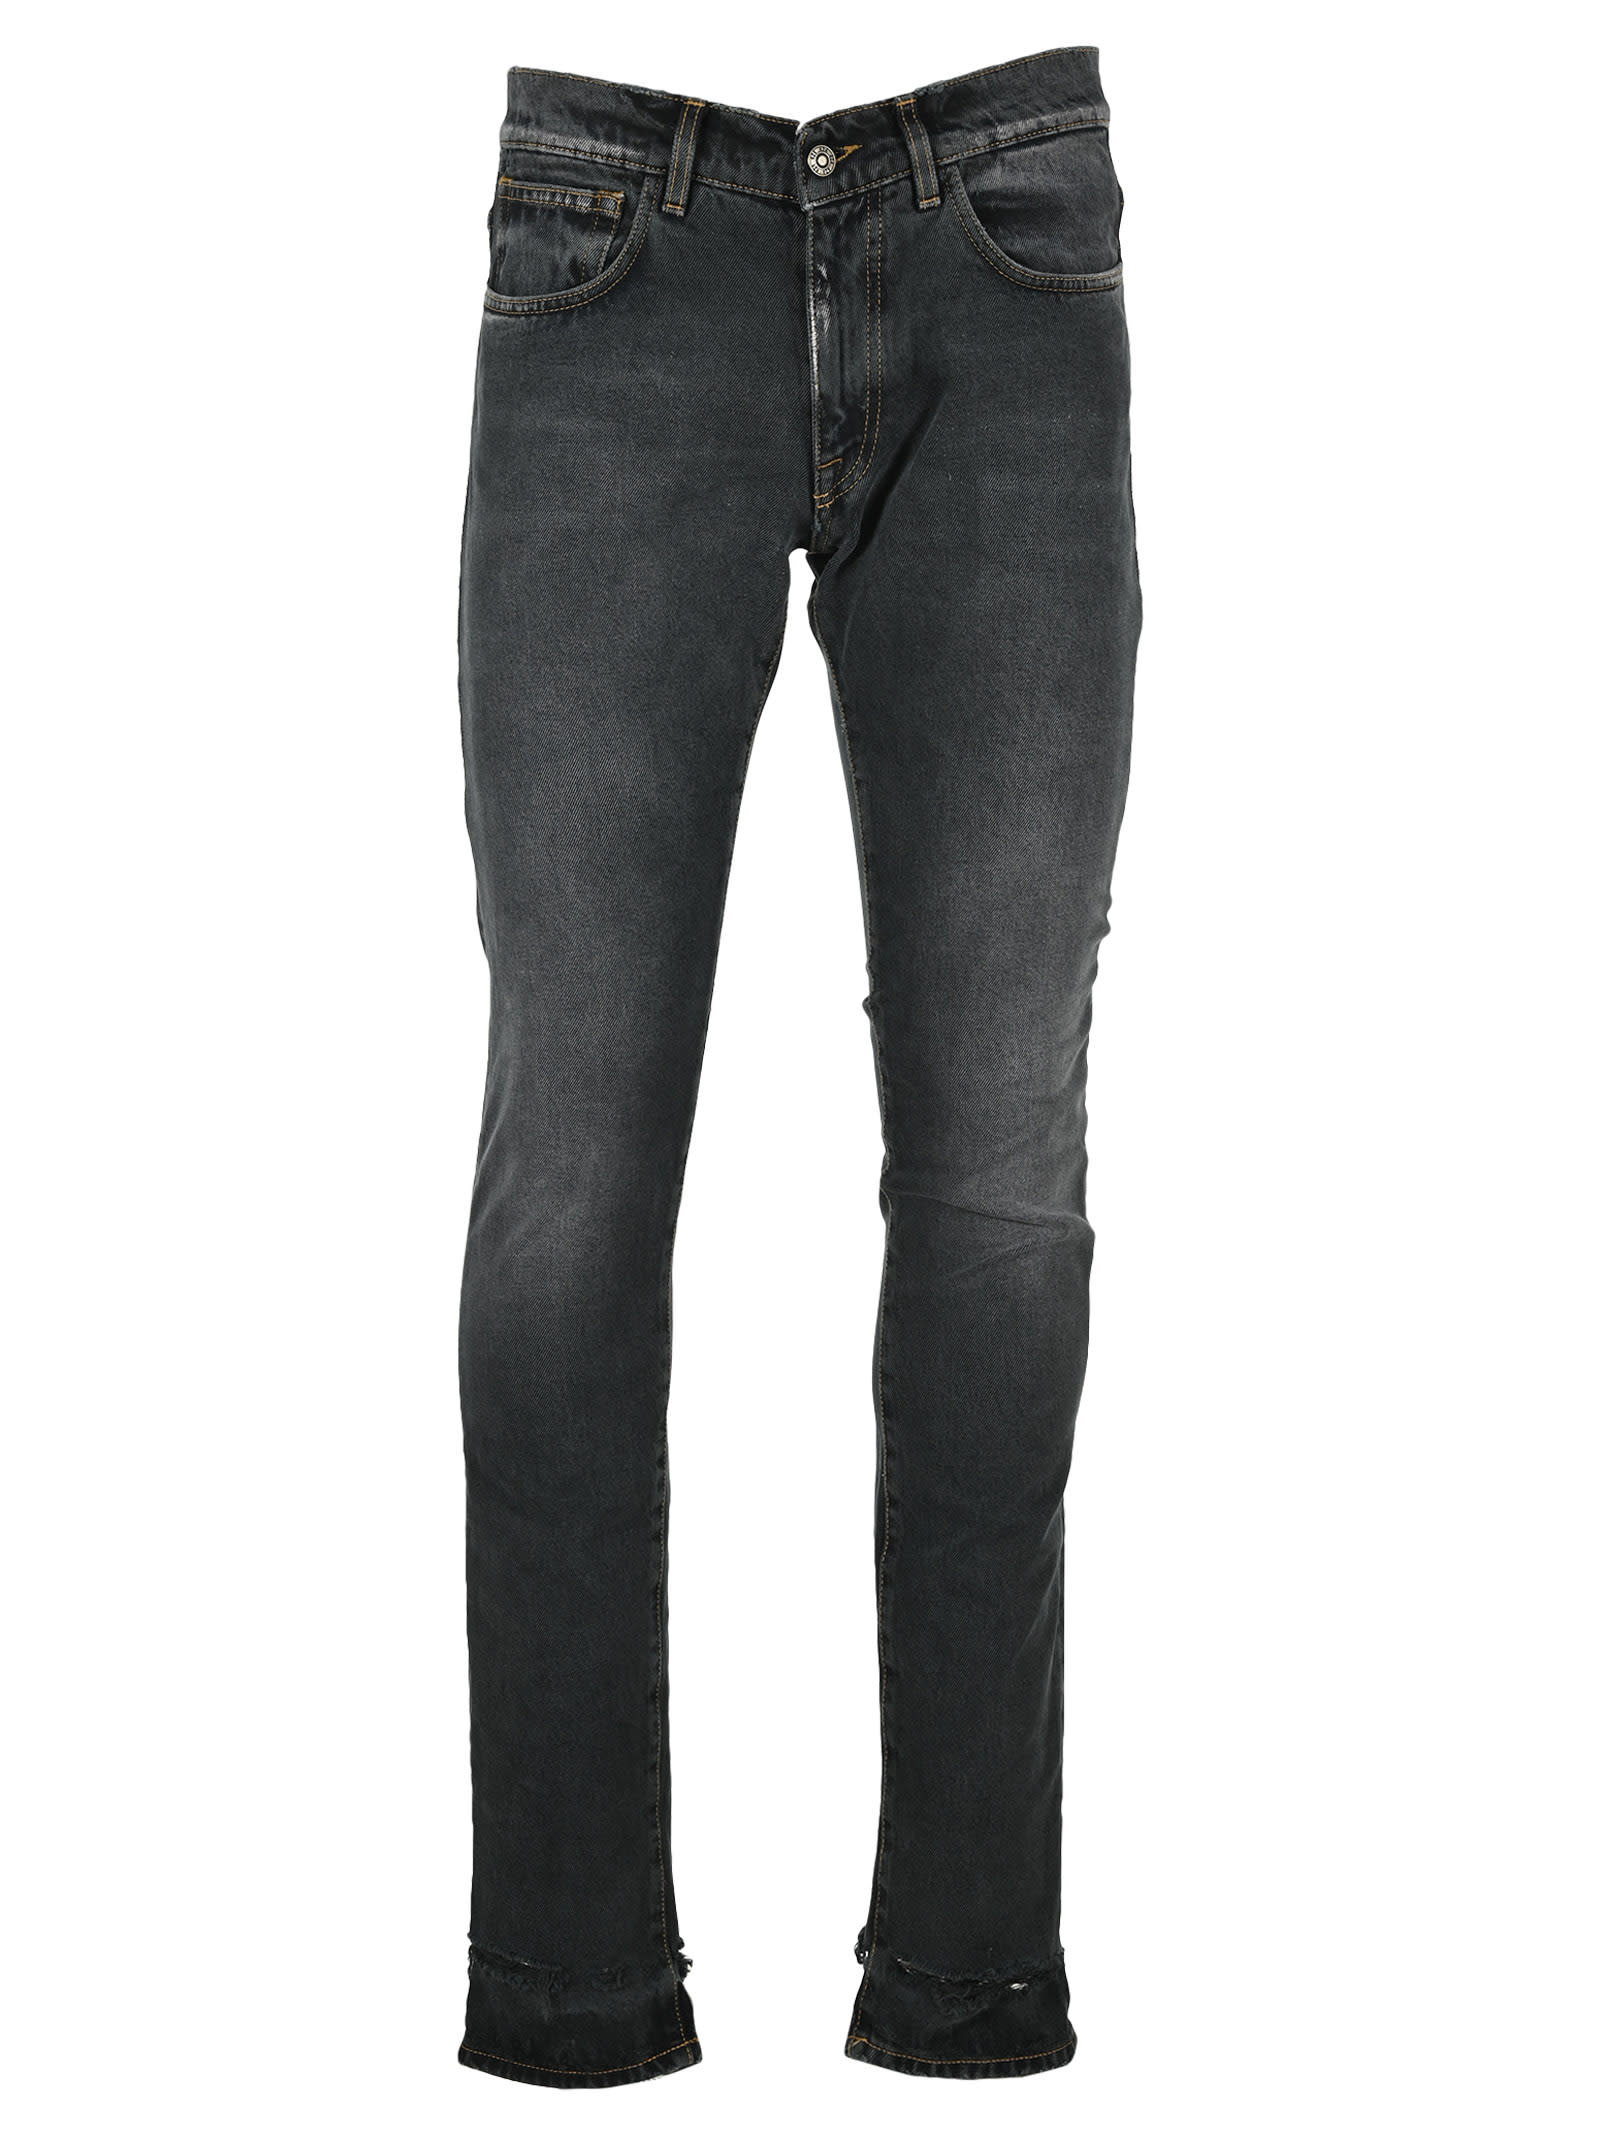 FourTwoFour on Fairfax 424 Slim Fit Jeans